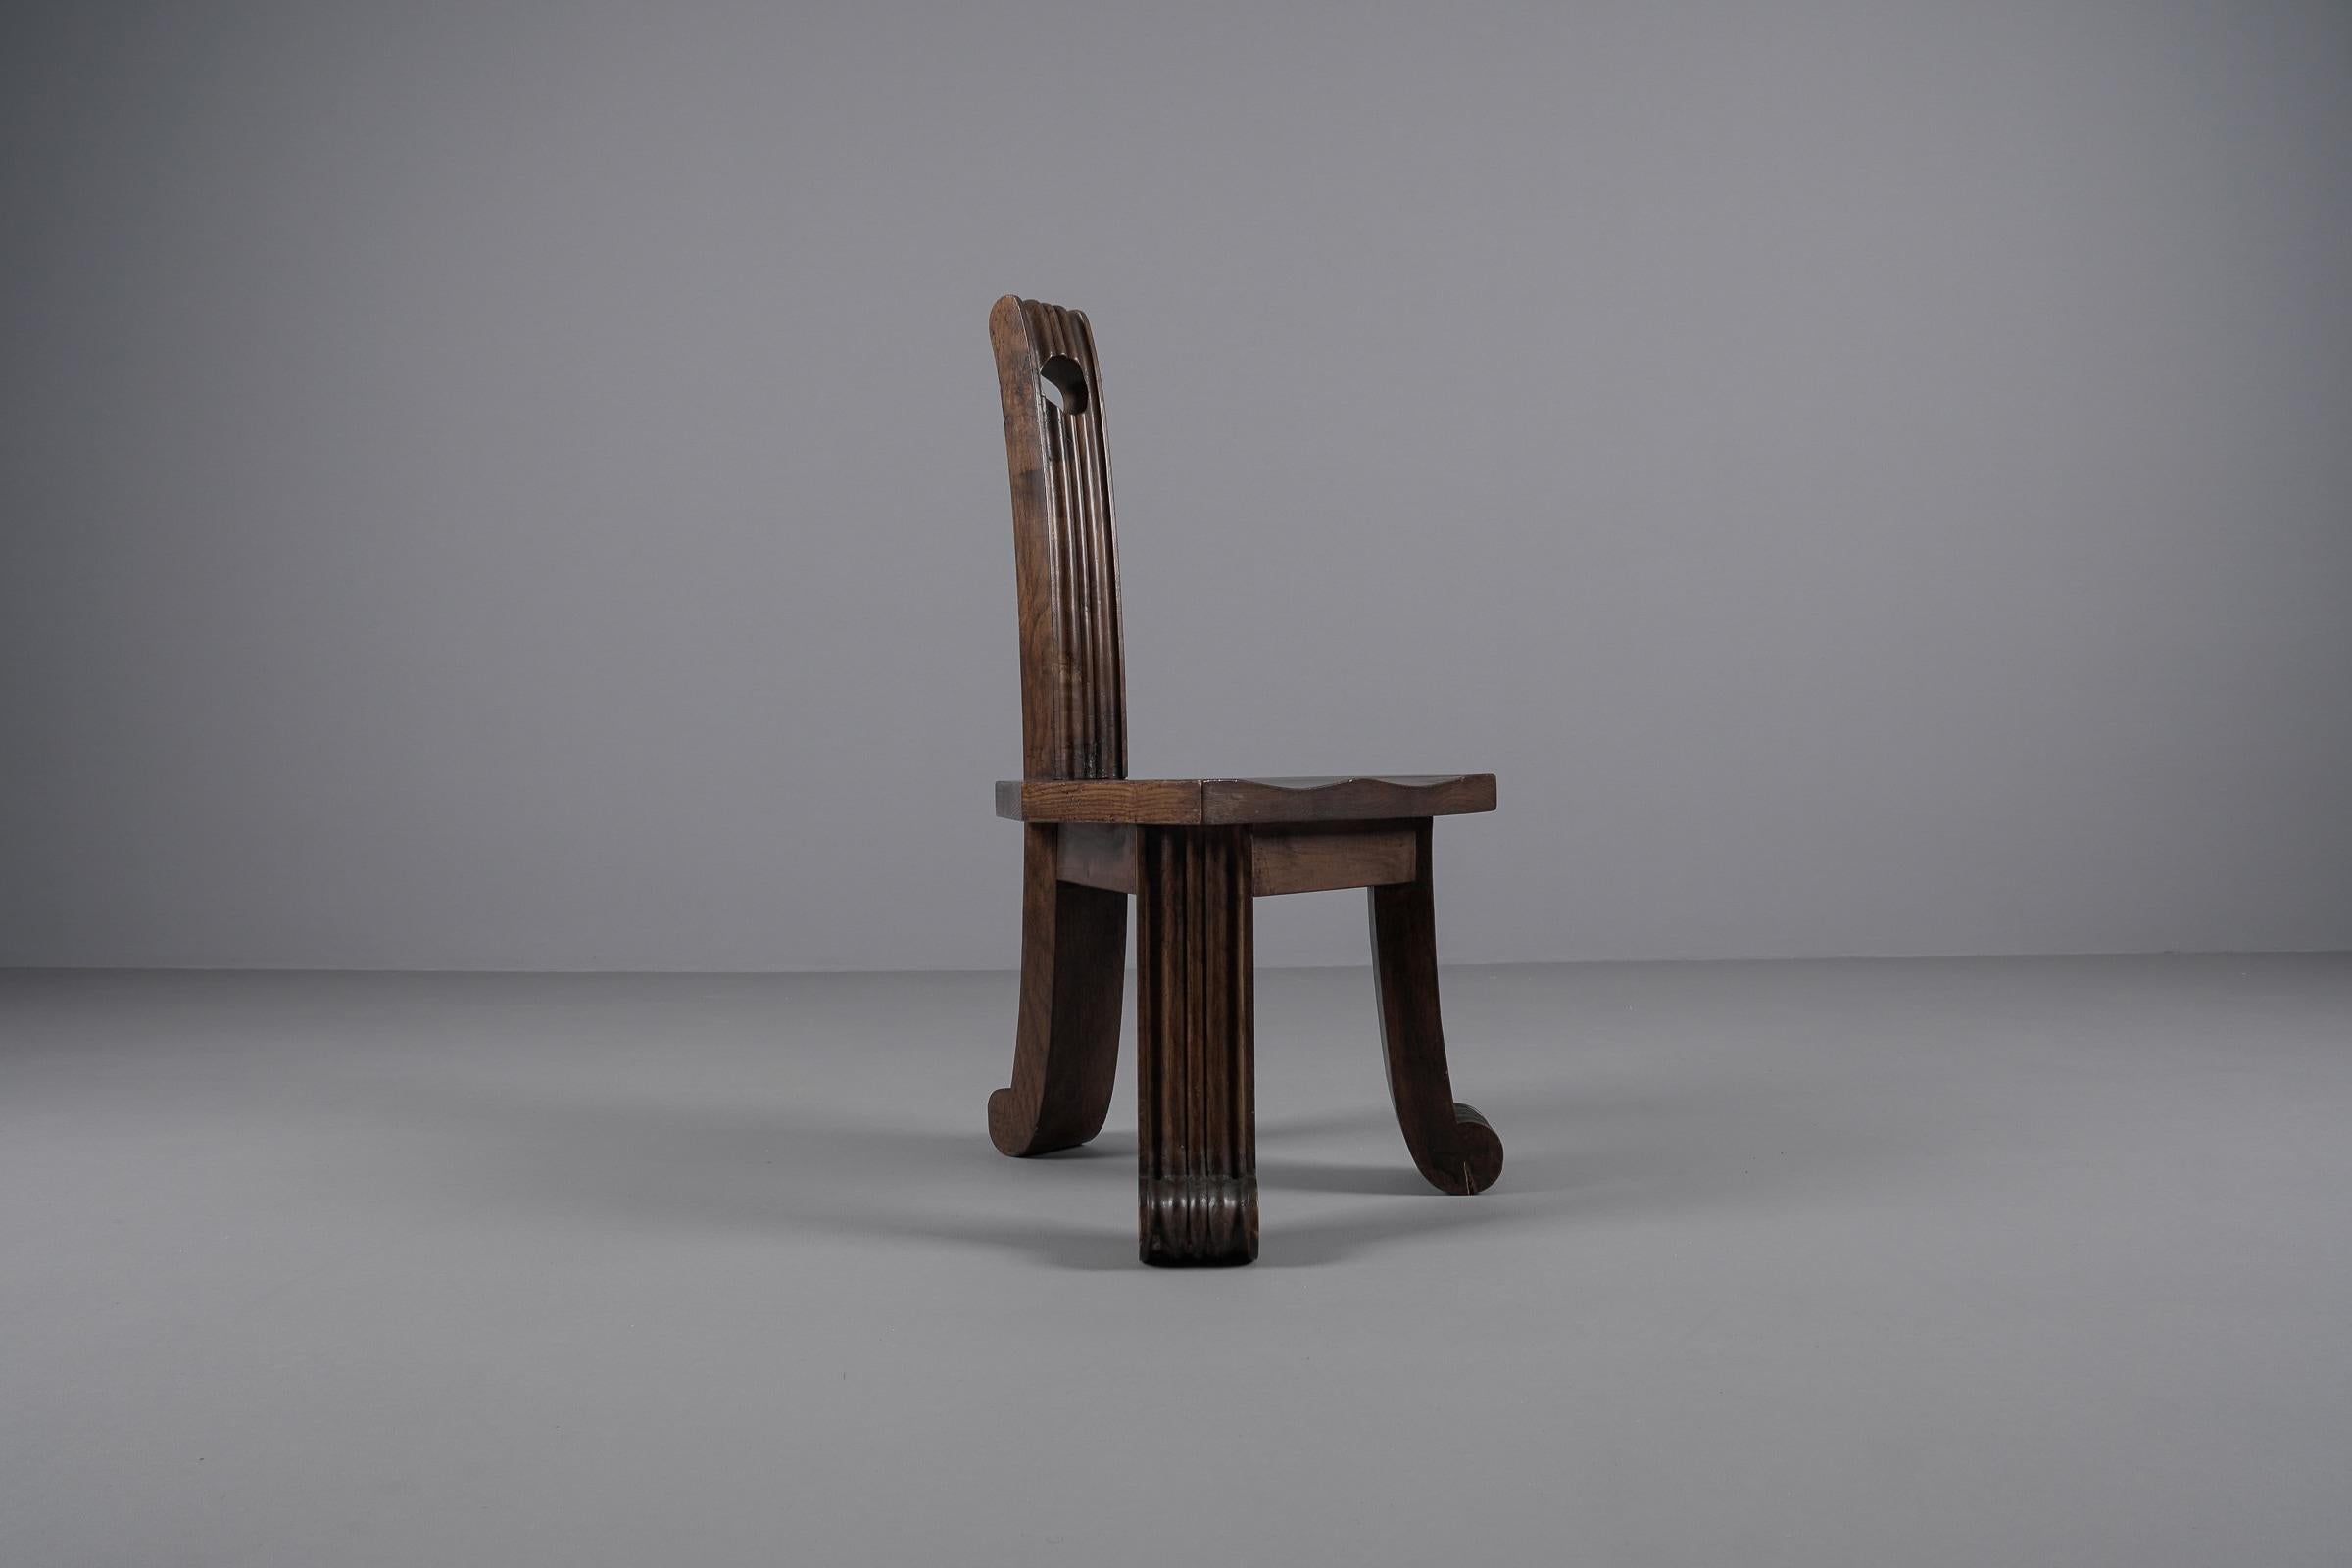 Austrian Primitive Rustic Britalist Modern Sculptured Chair, 1940s Europe